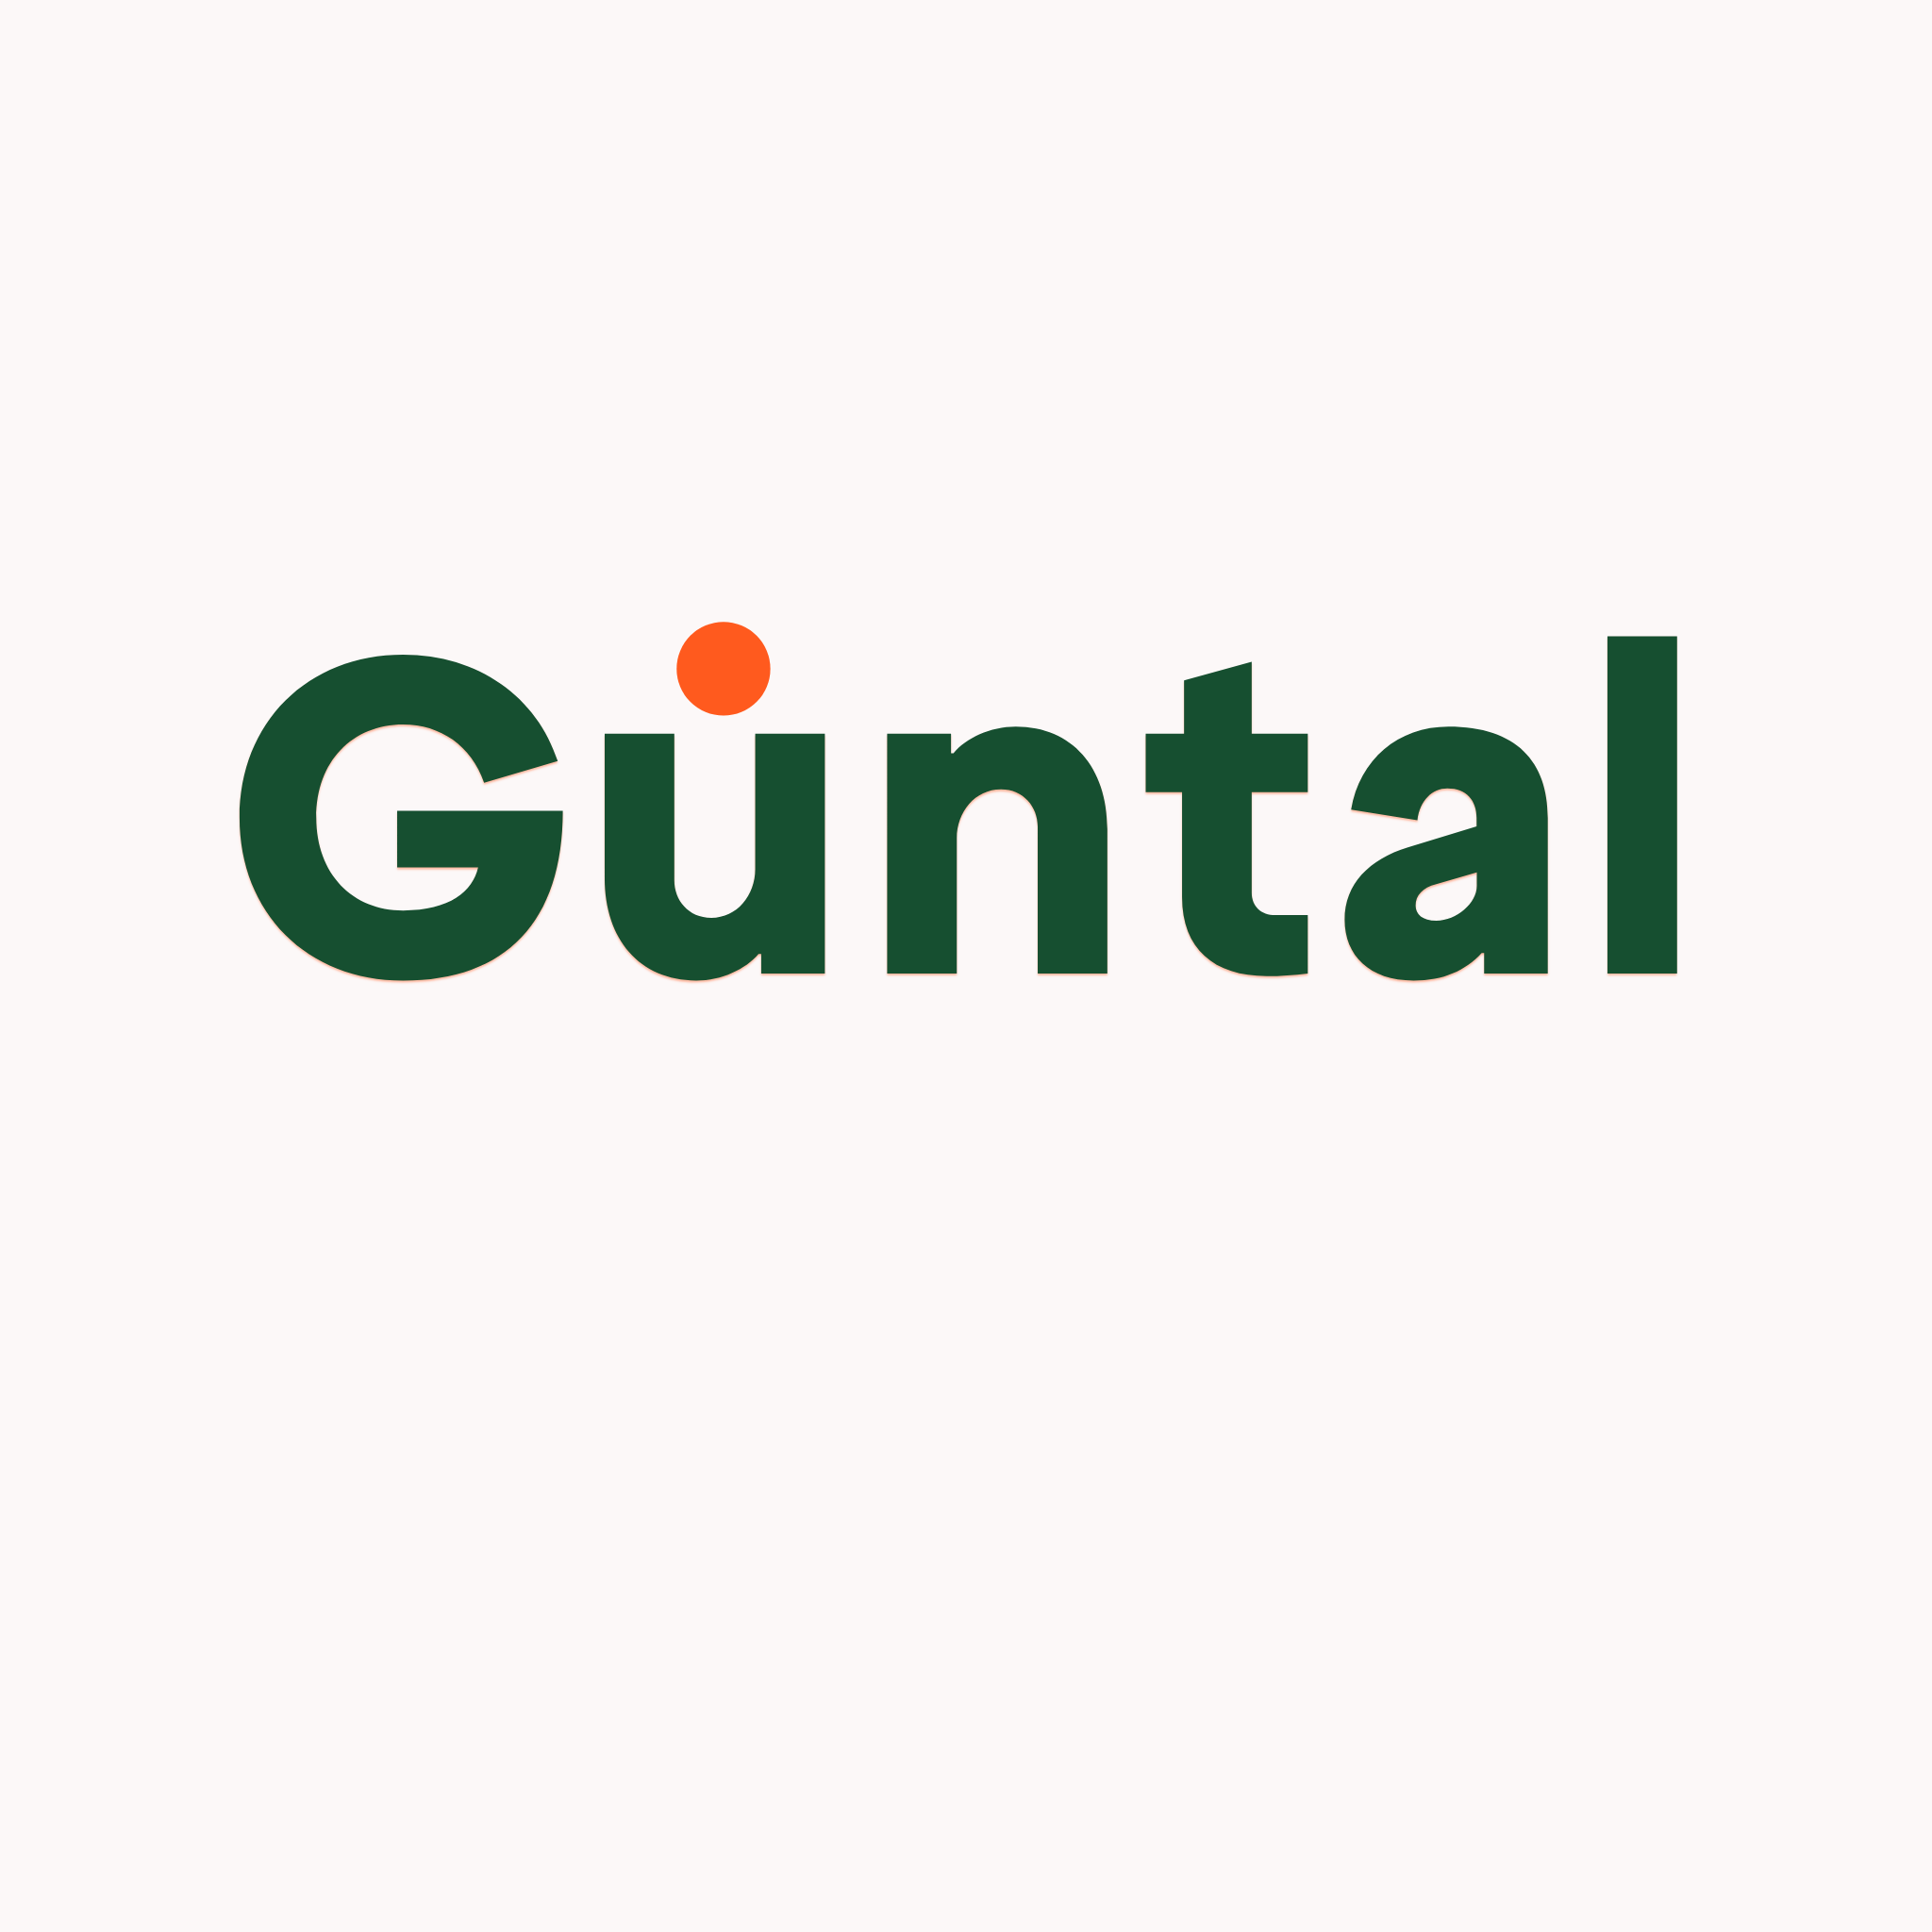 Guntal.com